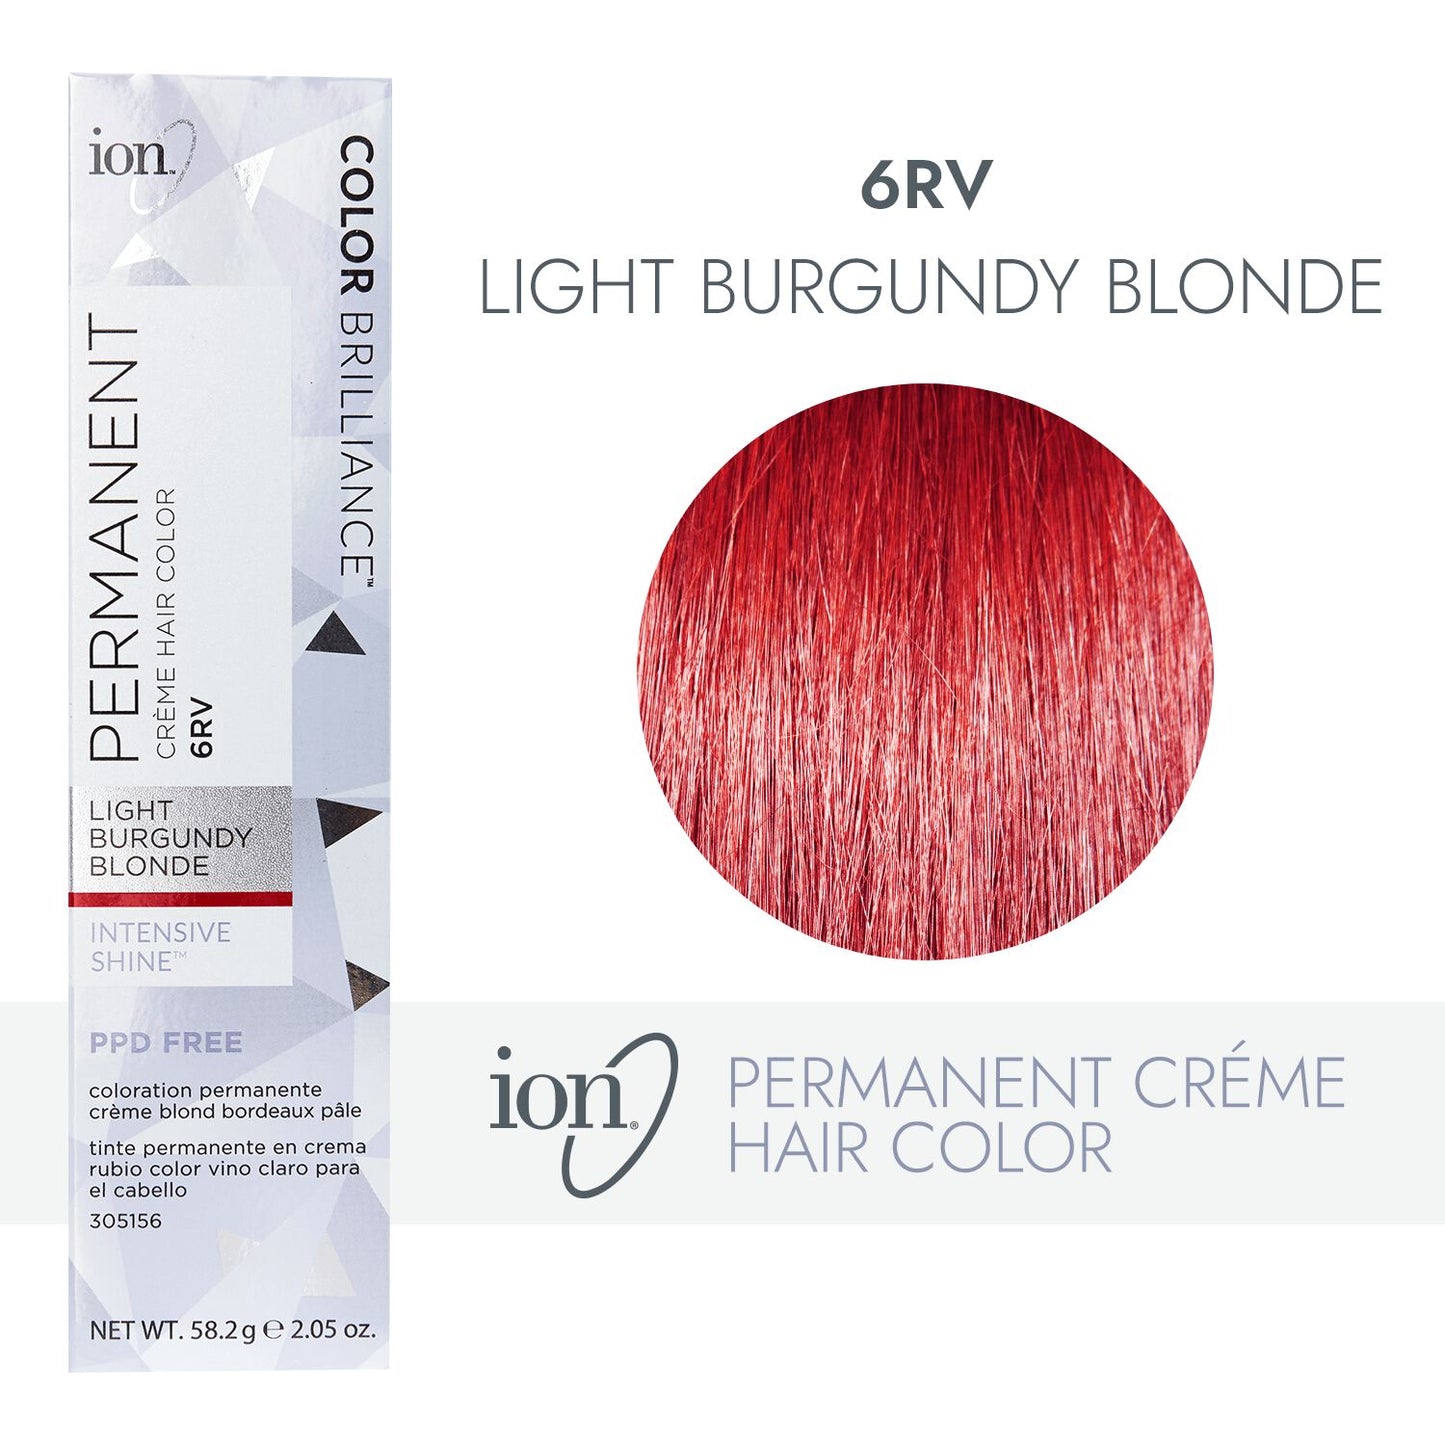 ion 6RV Light Burgundy Blonde Permanent Creme Hair Color